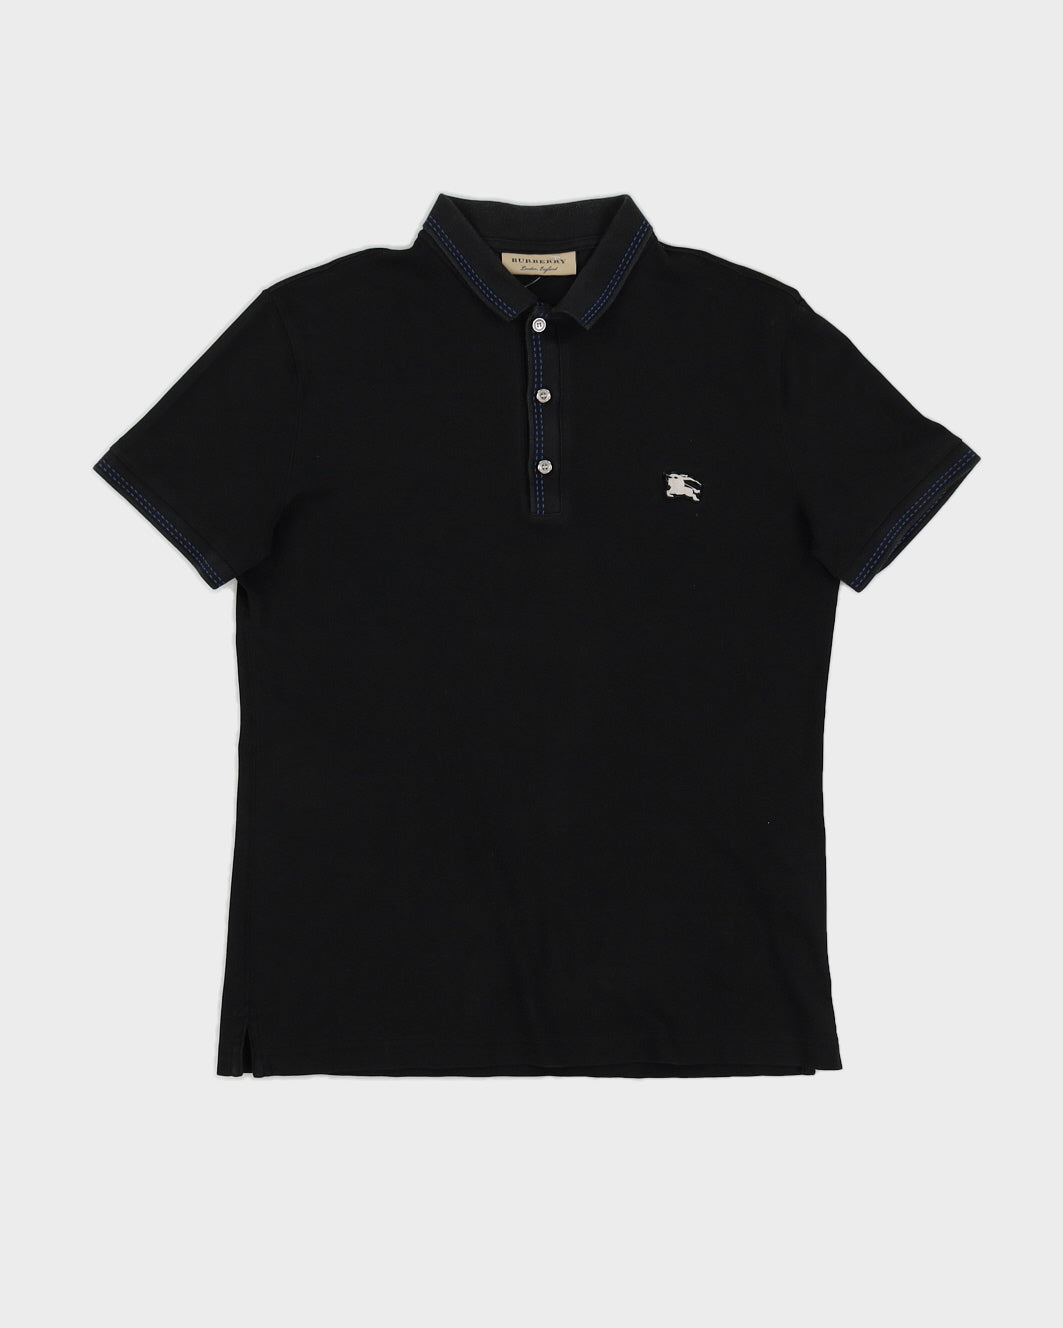 Burberry Men's Black Polo Shirt - M